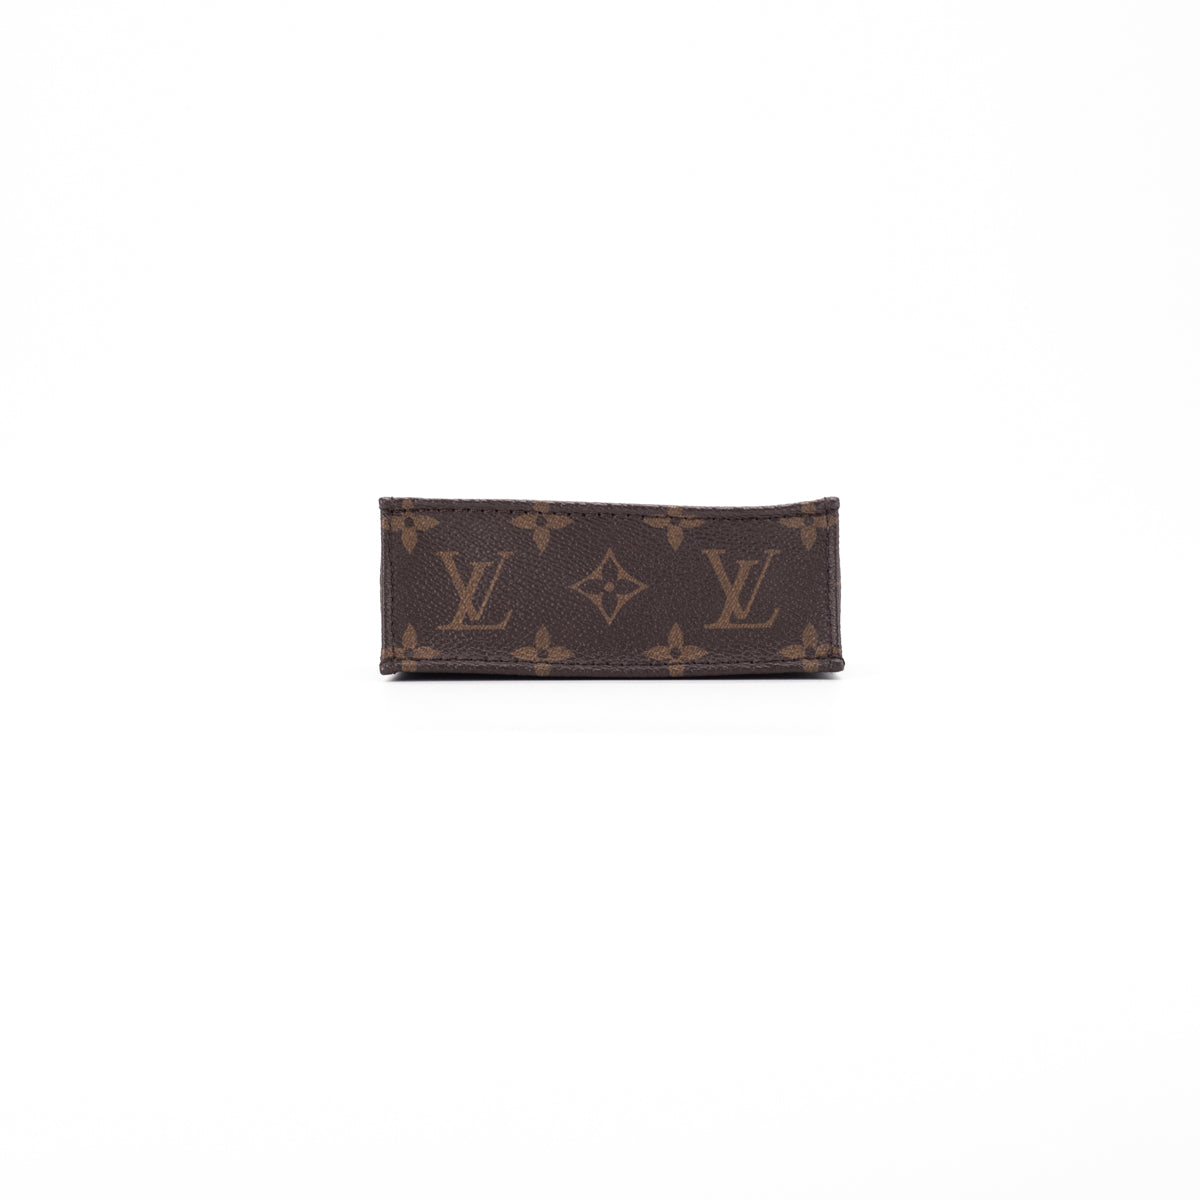 Petit Sac Plat Monogram - Women - Small Leather Goods